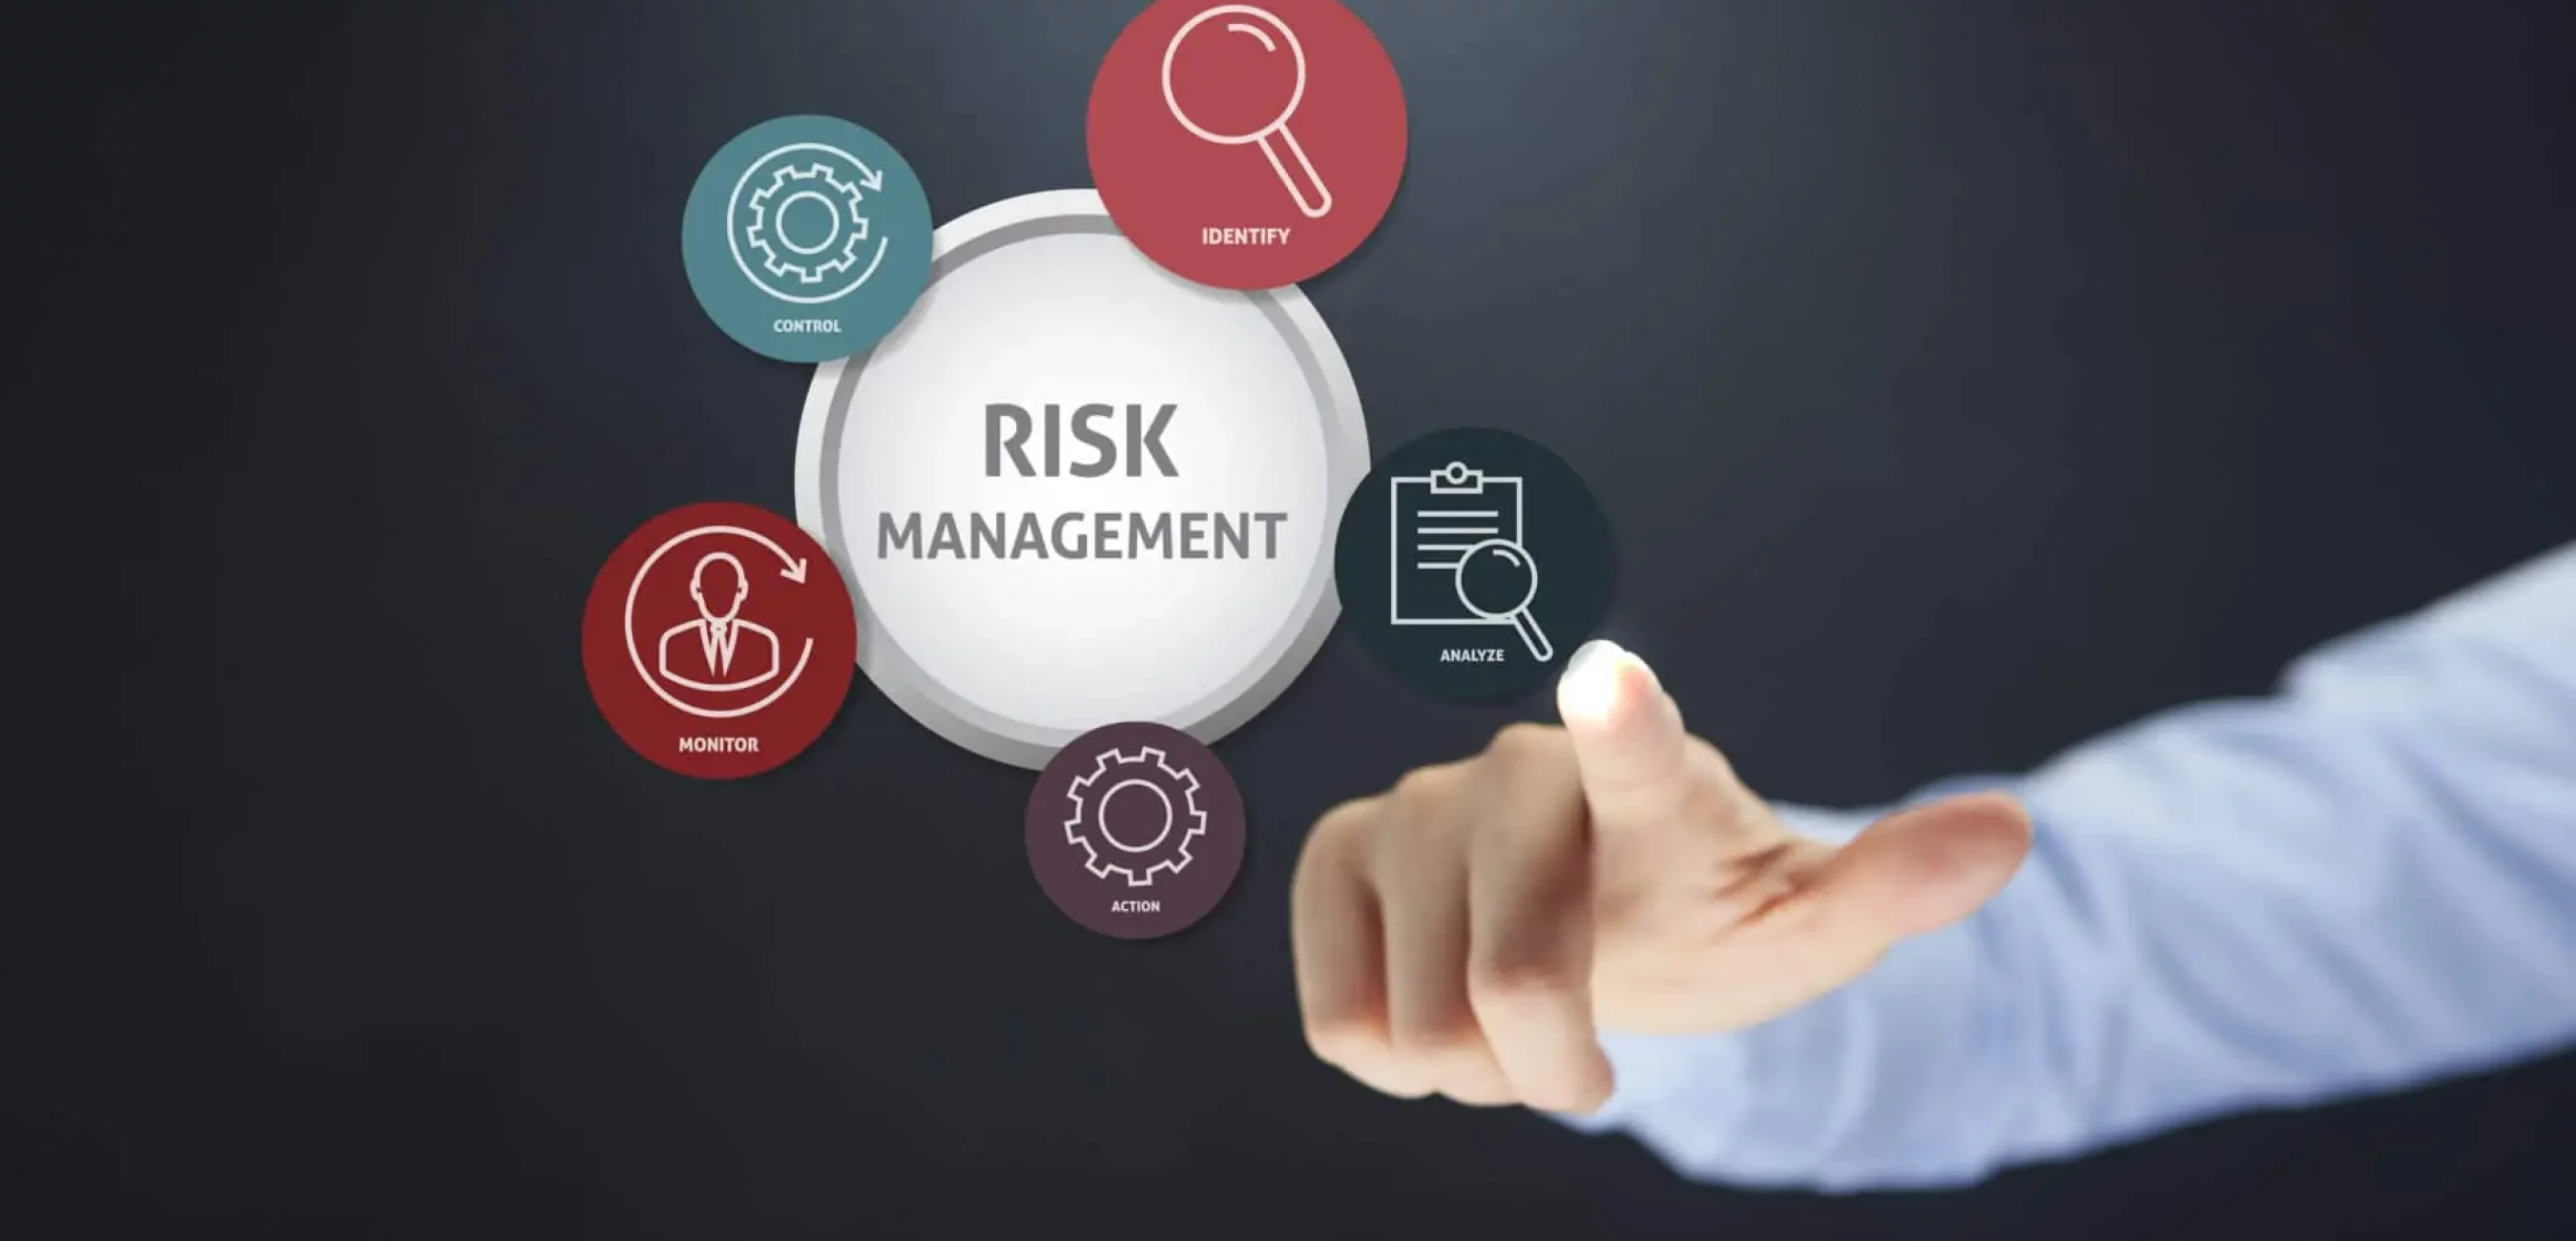 Risk Management Process and Risk Management File